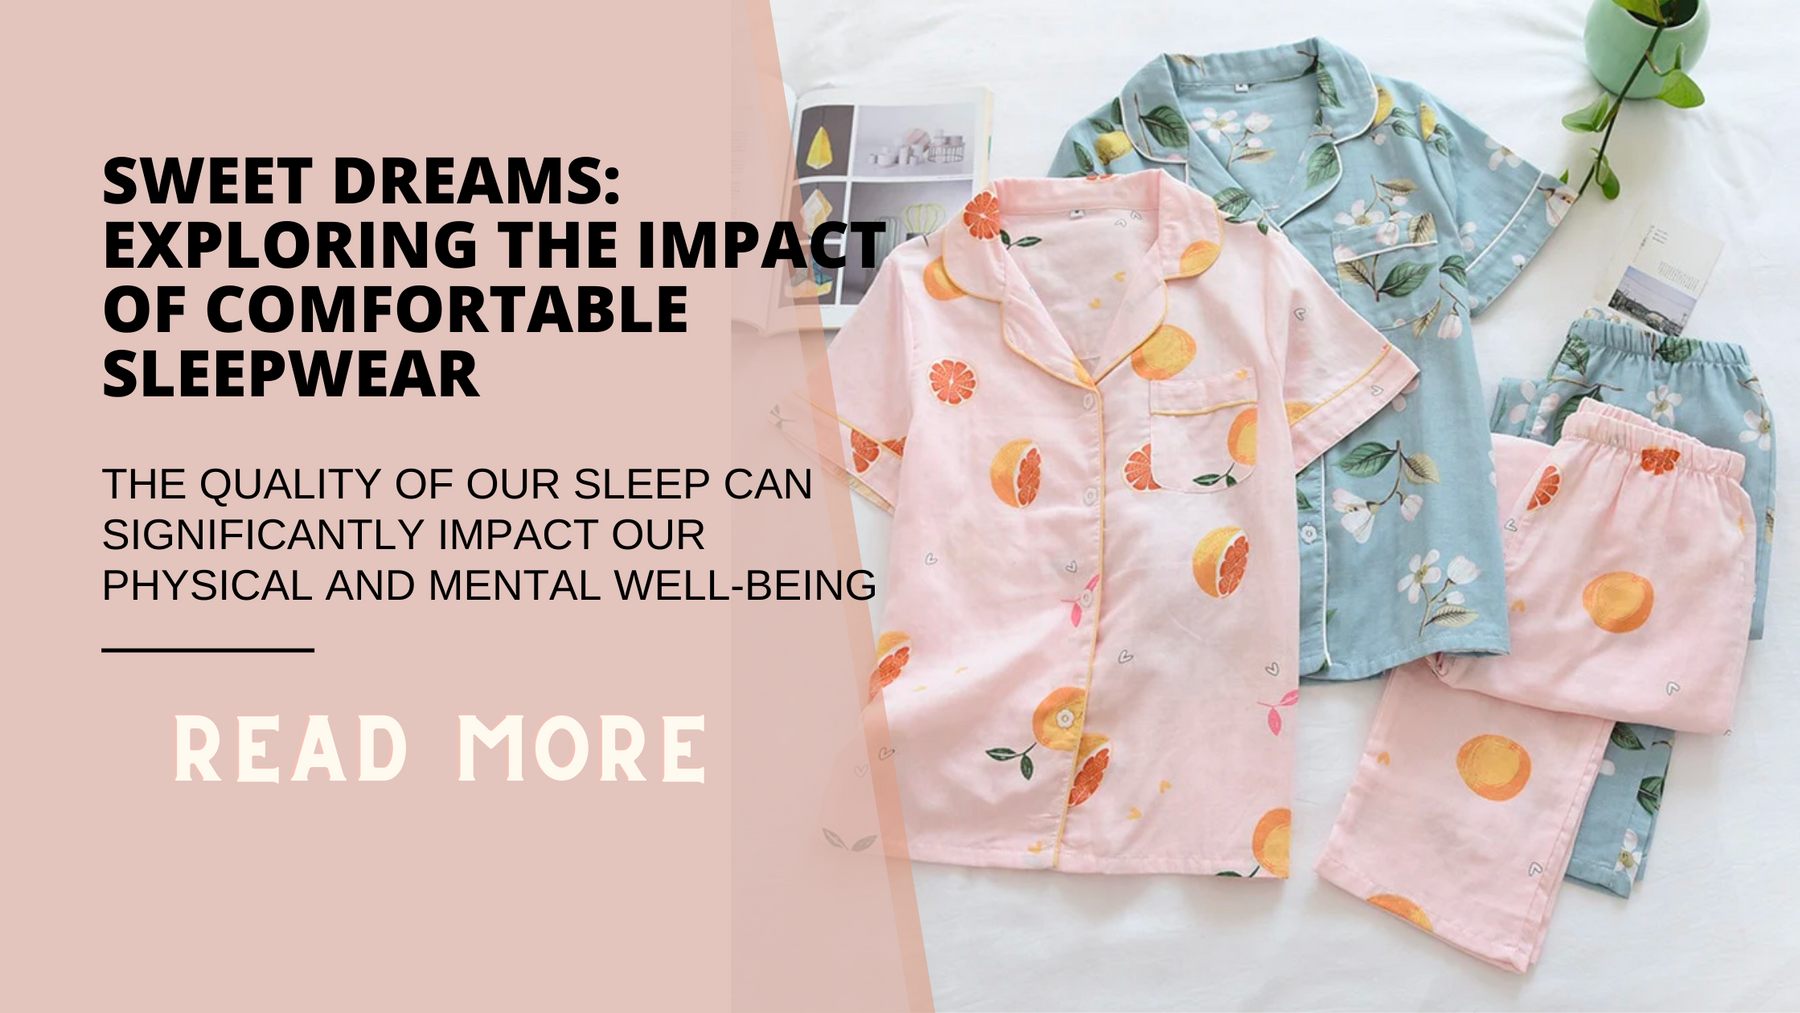 Sweet Dreams: Exploring the Impact of Comfortable Sleepwear